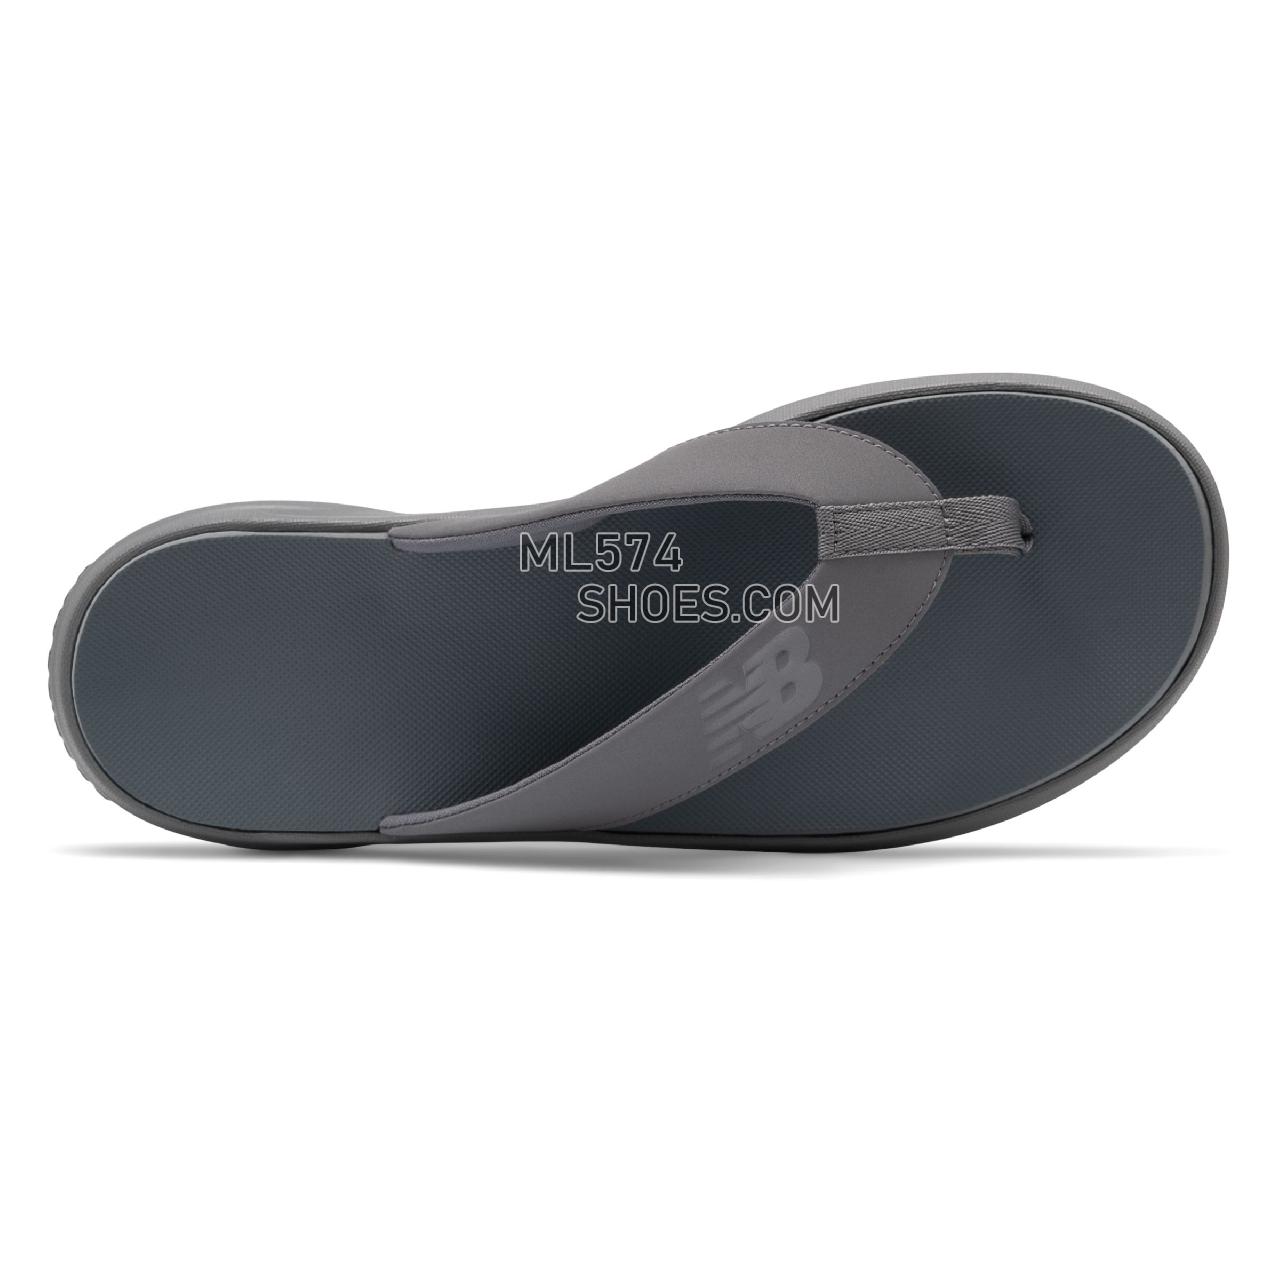 New Balance 340 - Men's Flip Flops - Light Aluminum with Marblehead - SMT340G1